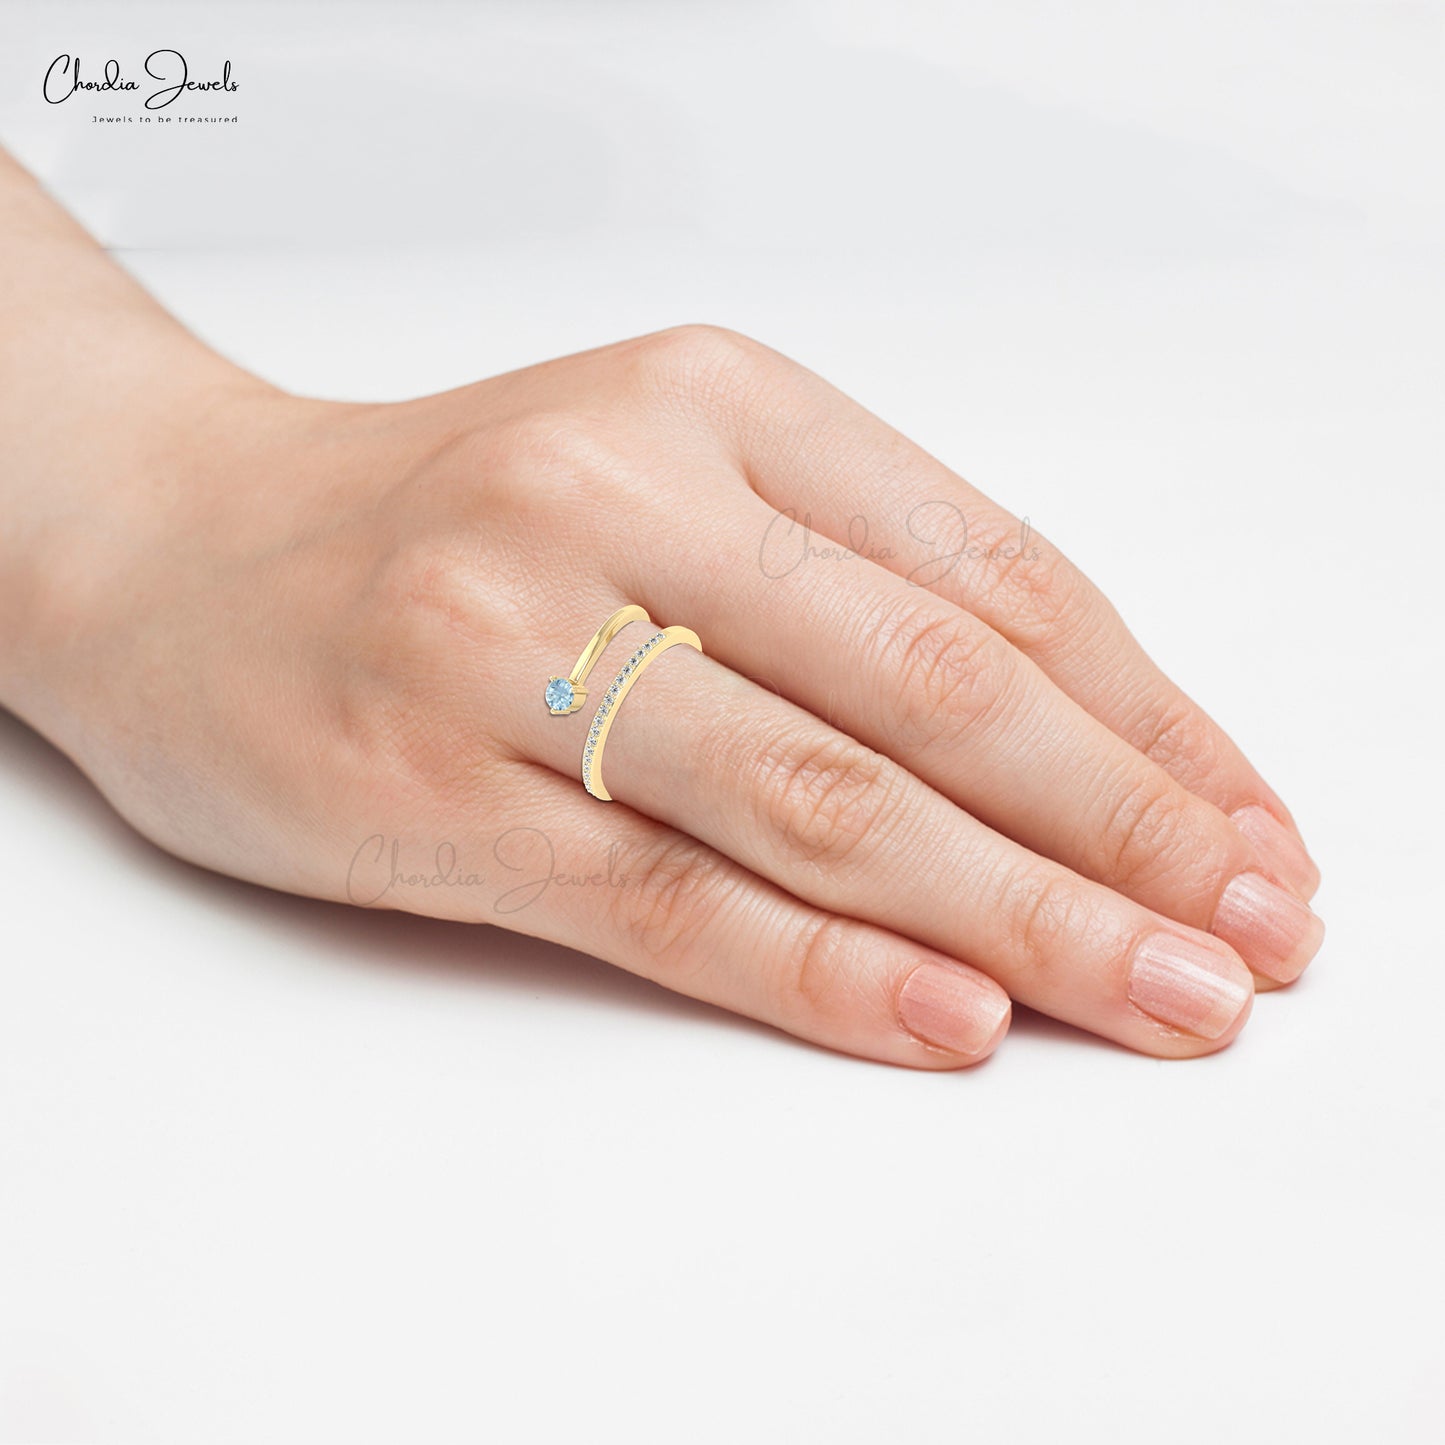 Genuine Aquamarine Dainty Ring 14k Real Gold G-H Diamond Engagement Ring 3mm Round Cut Gemstone Fine Jewelry For Her